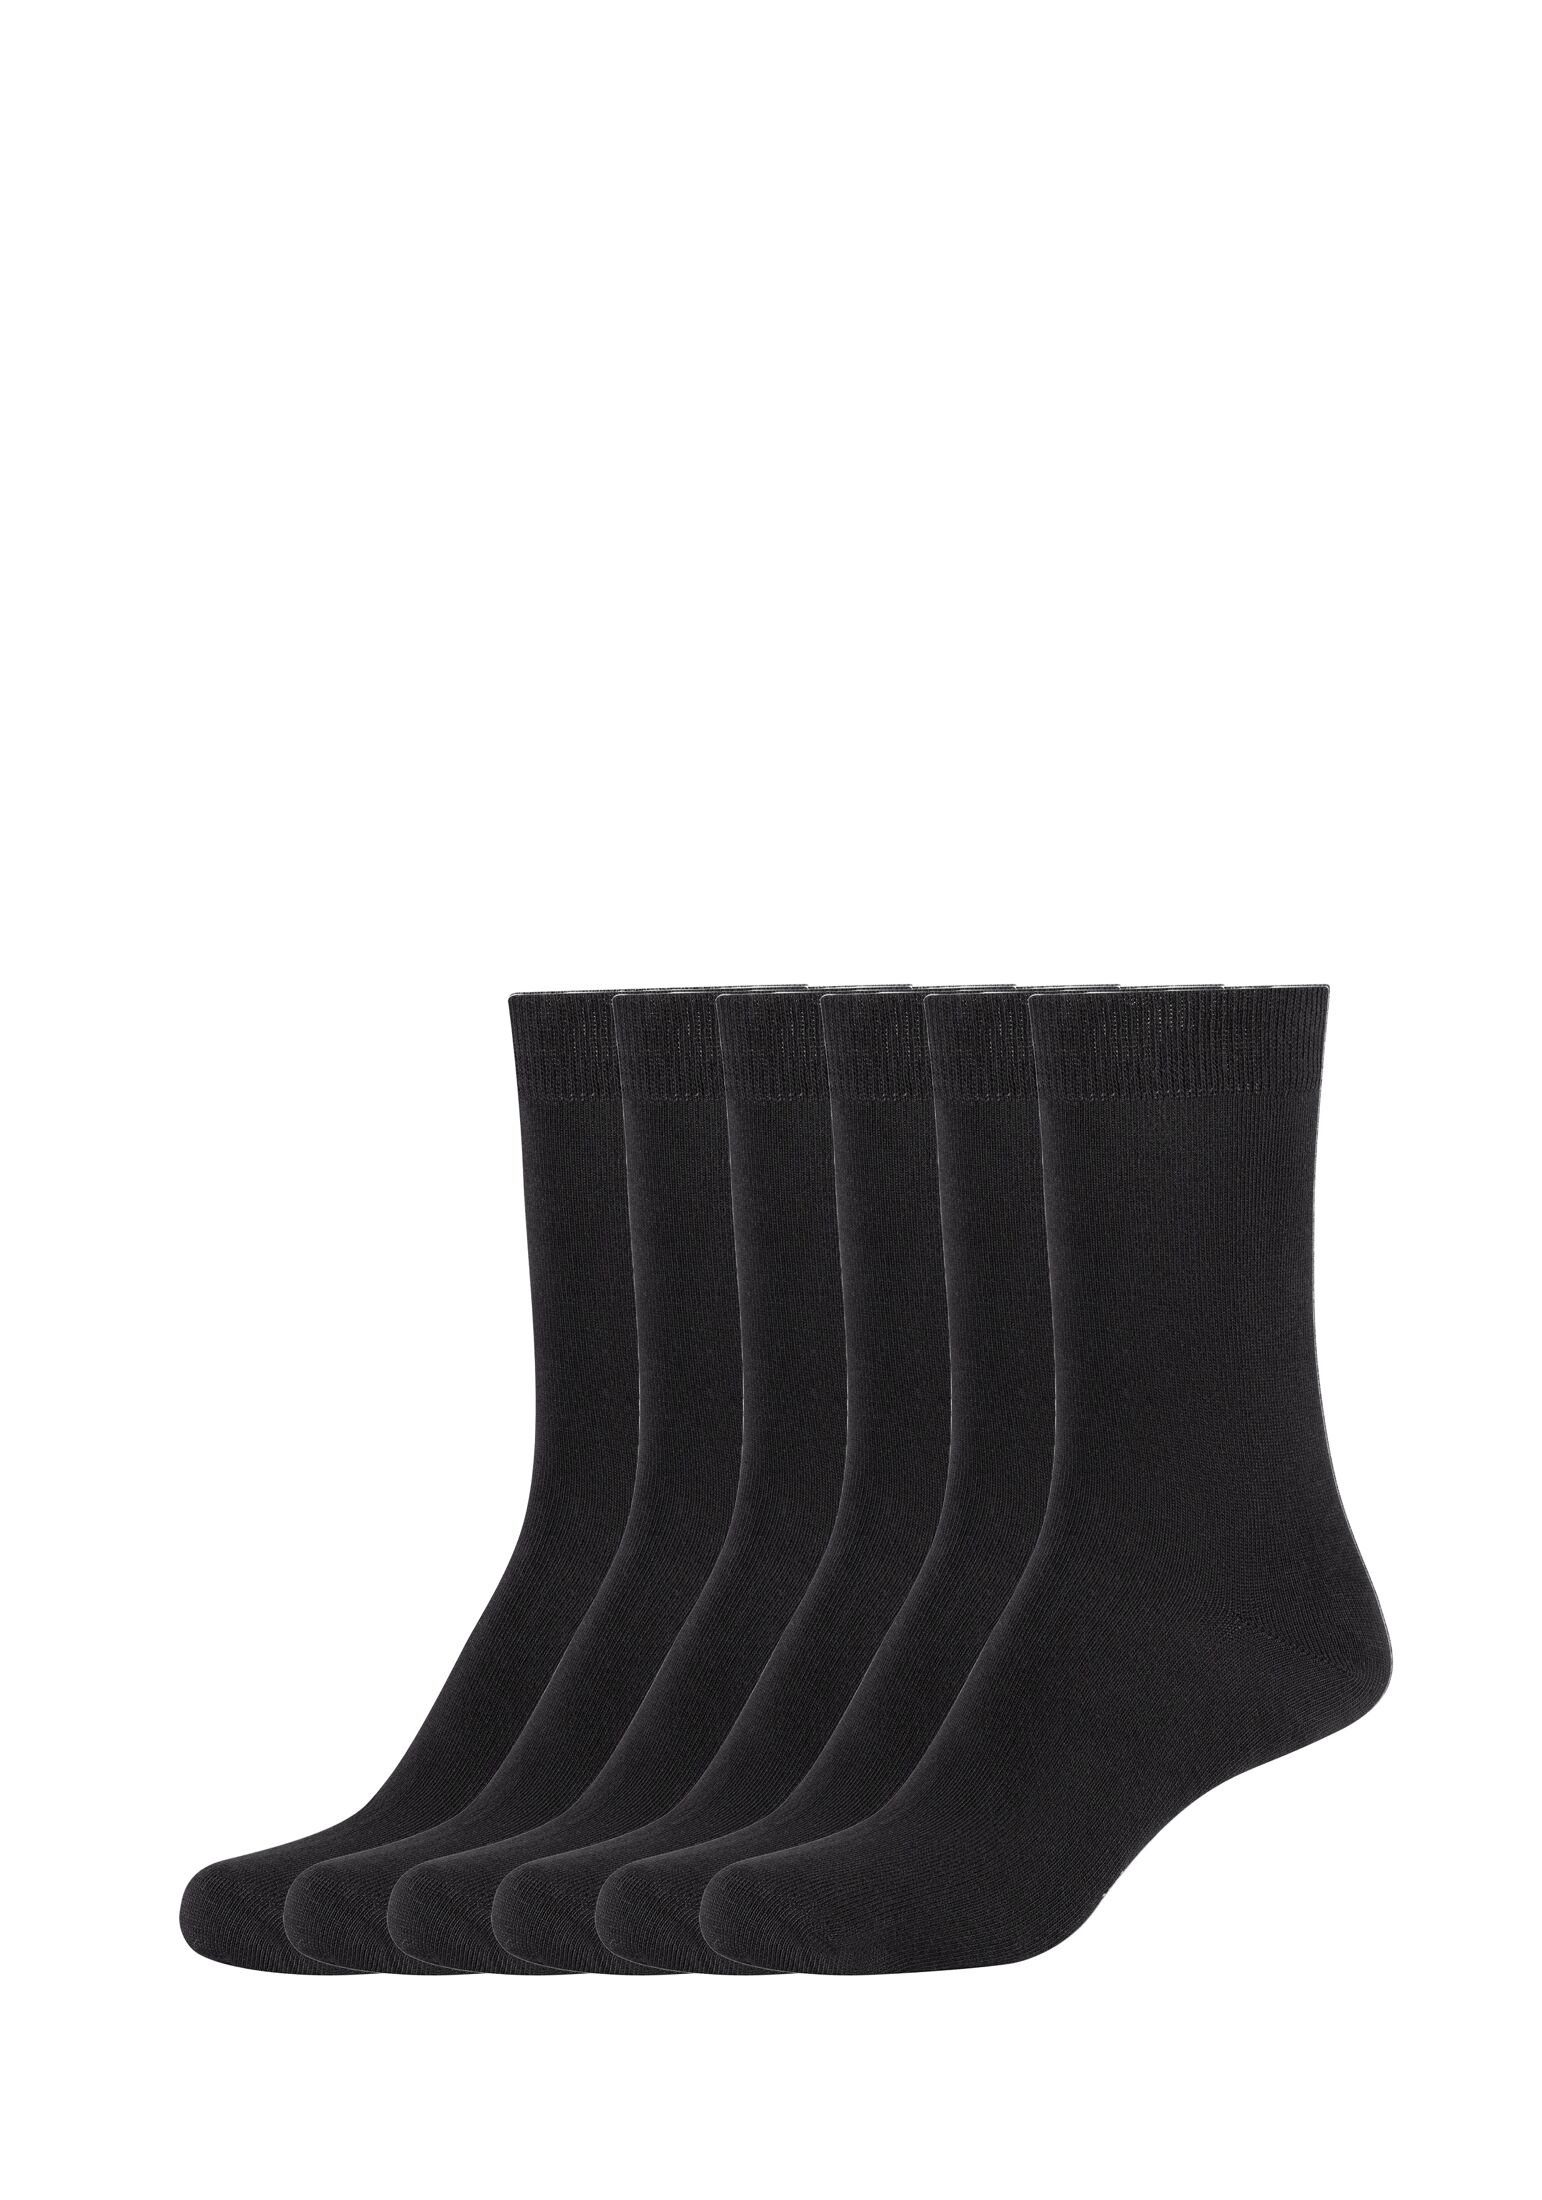 Stolz auf Popularität s.Oliver Socken Socken black 6er Pack